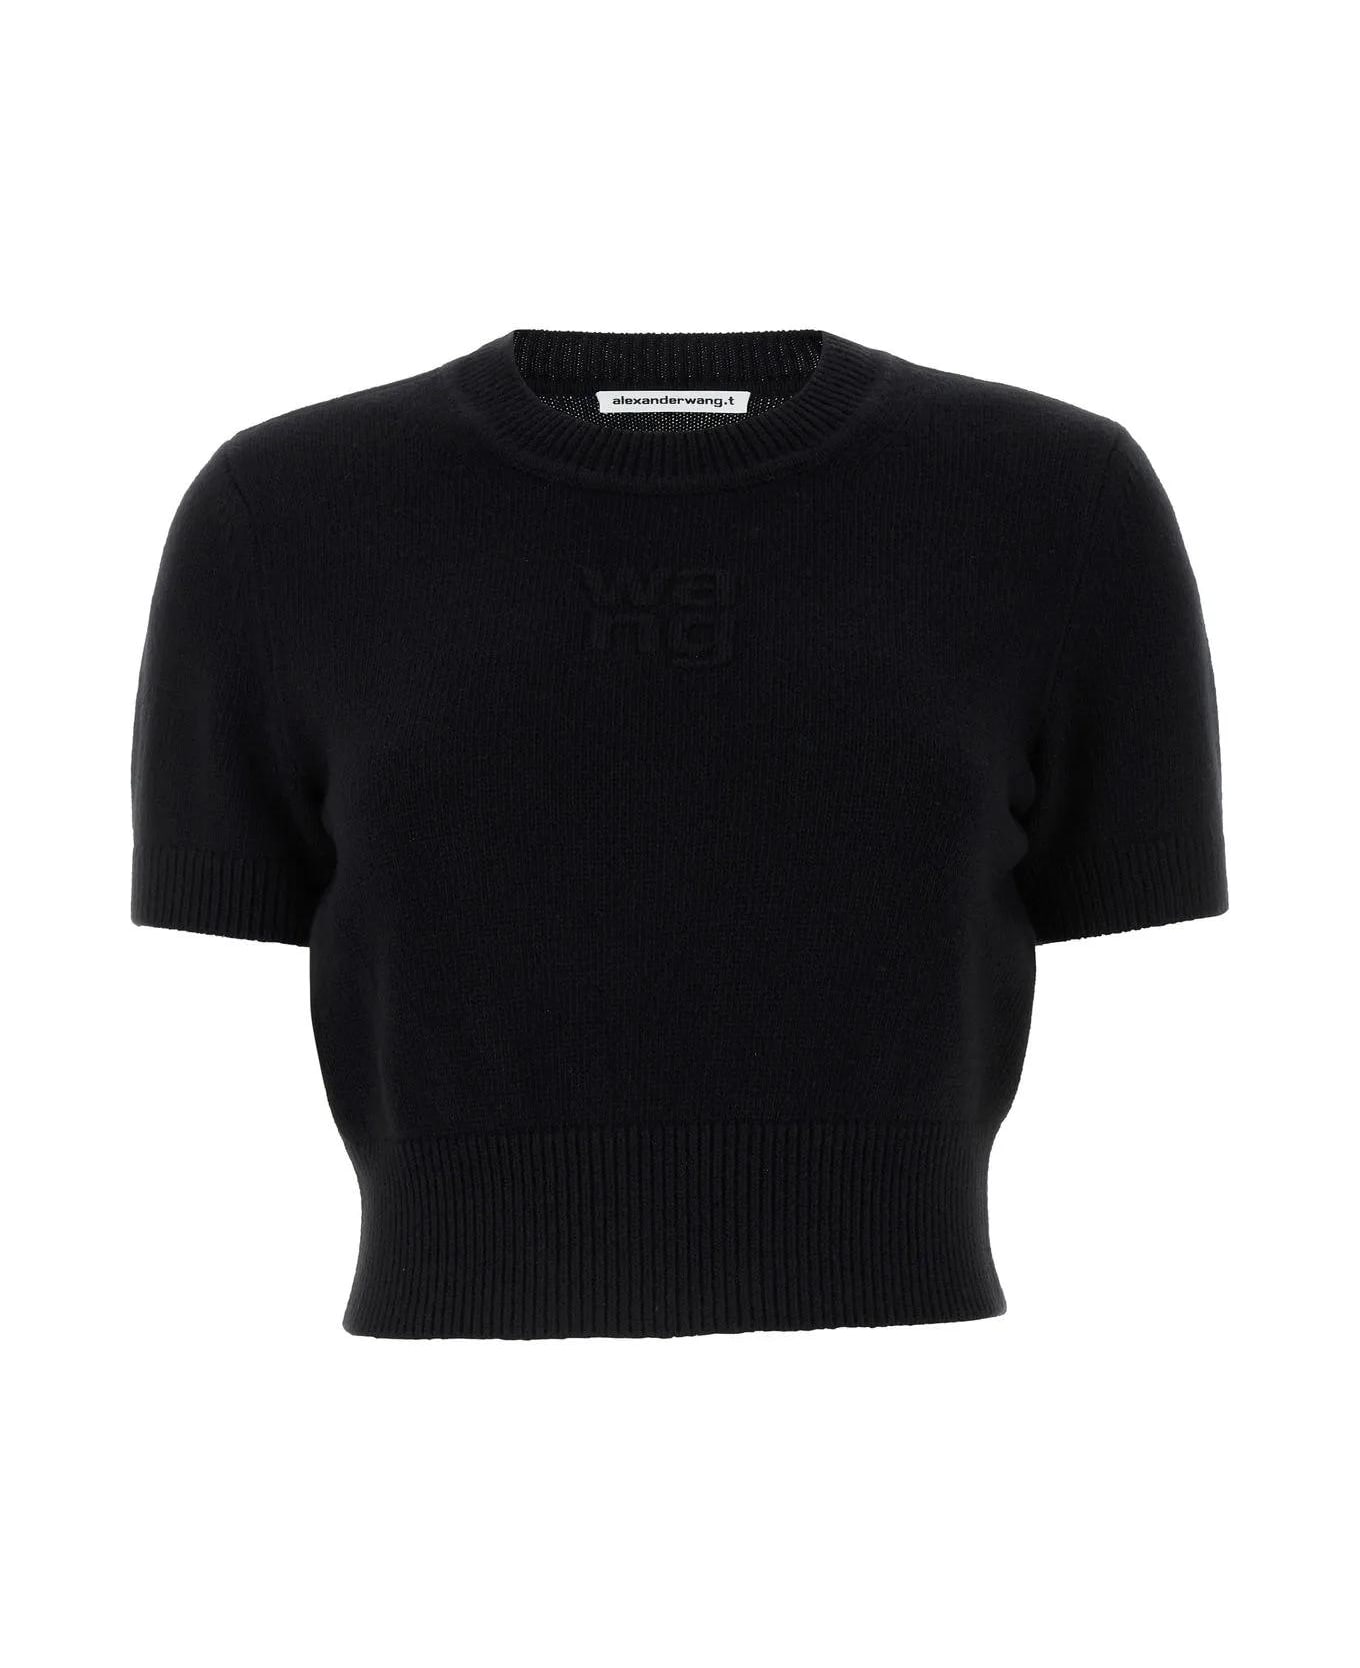 Alexander Wang Black Cotton Blend Sweater - Black ニットウェア